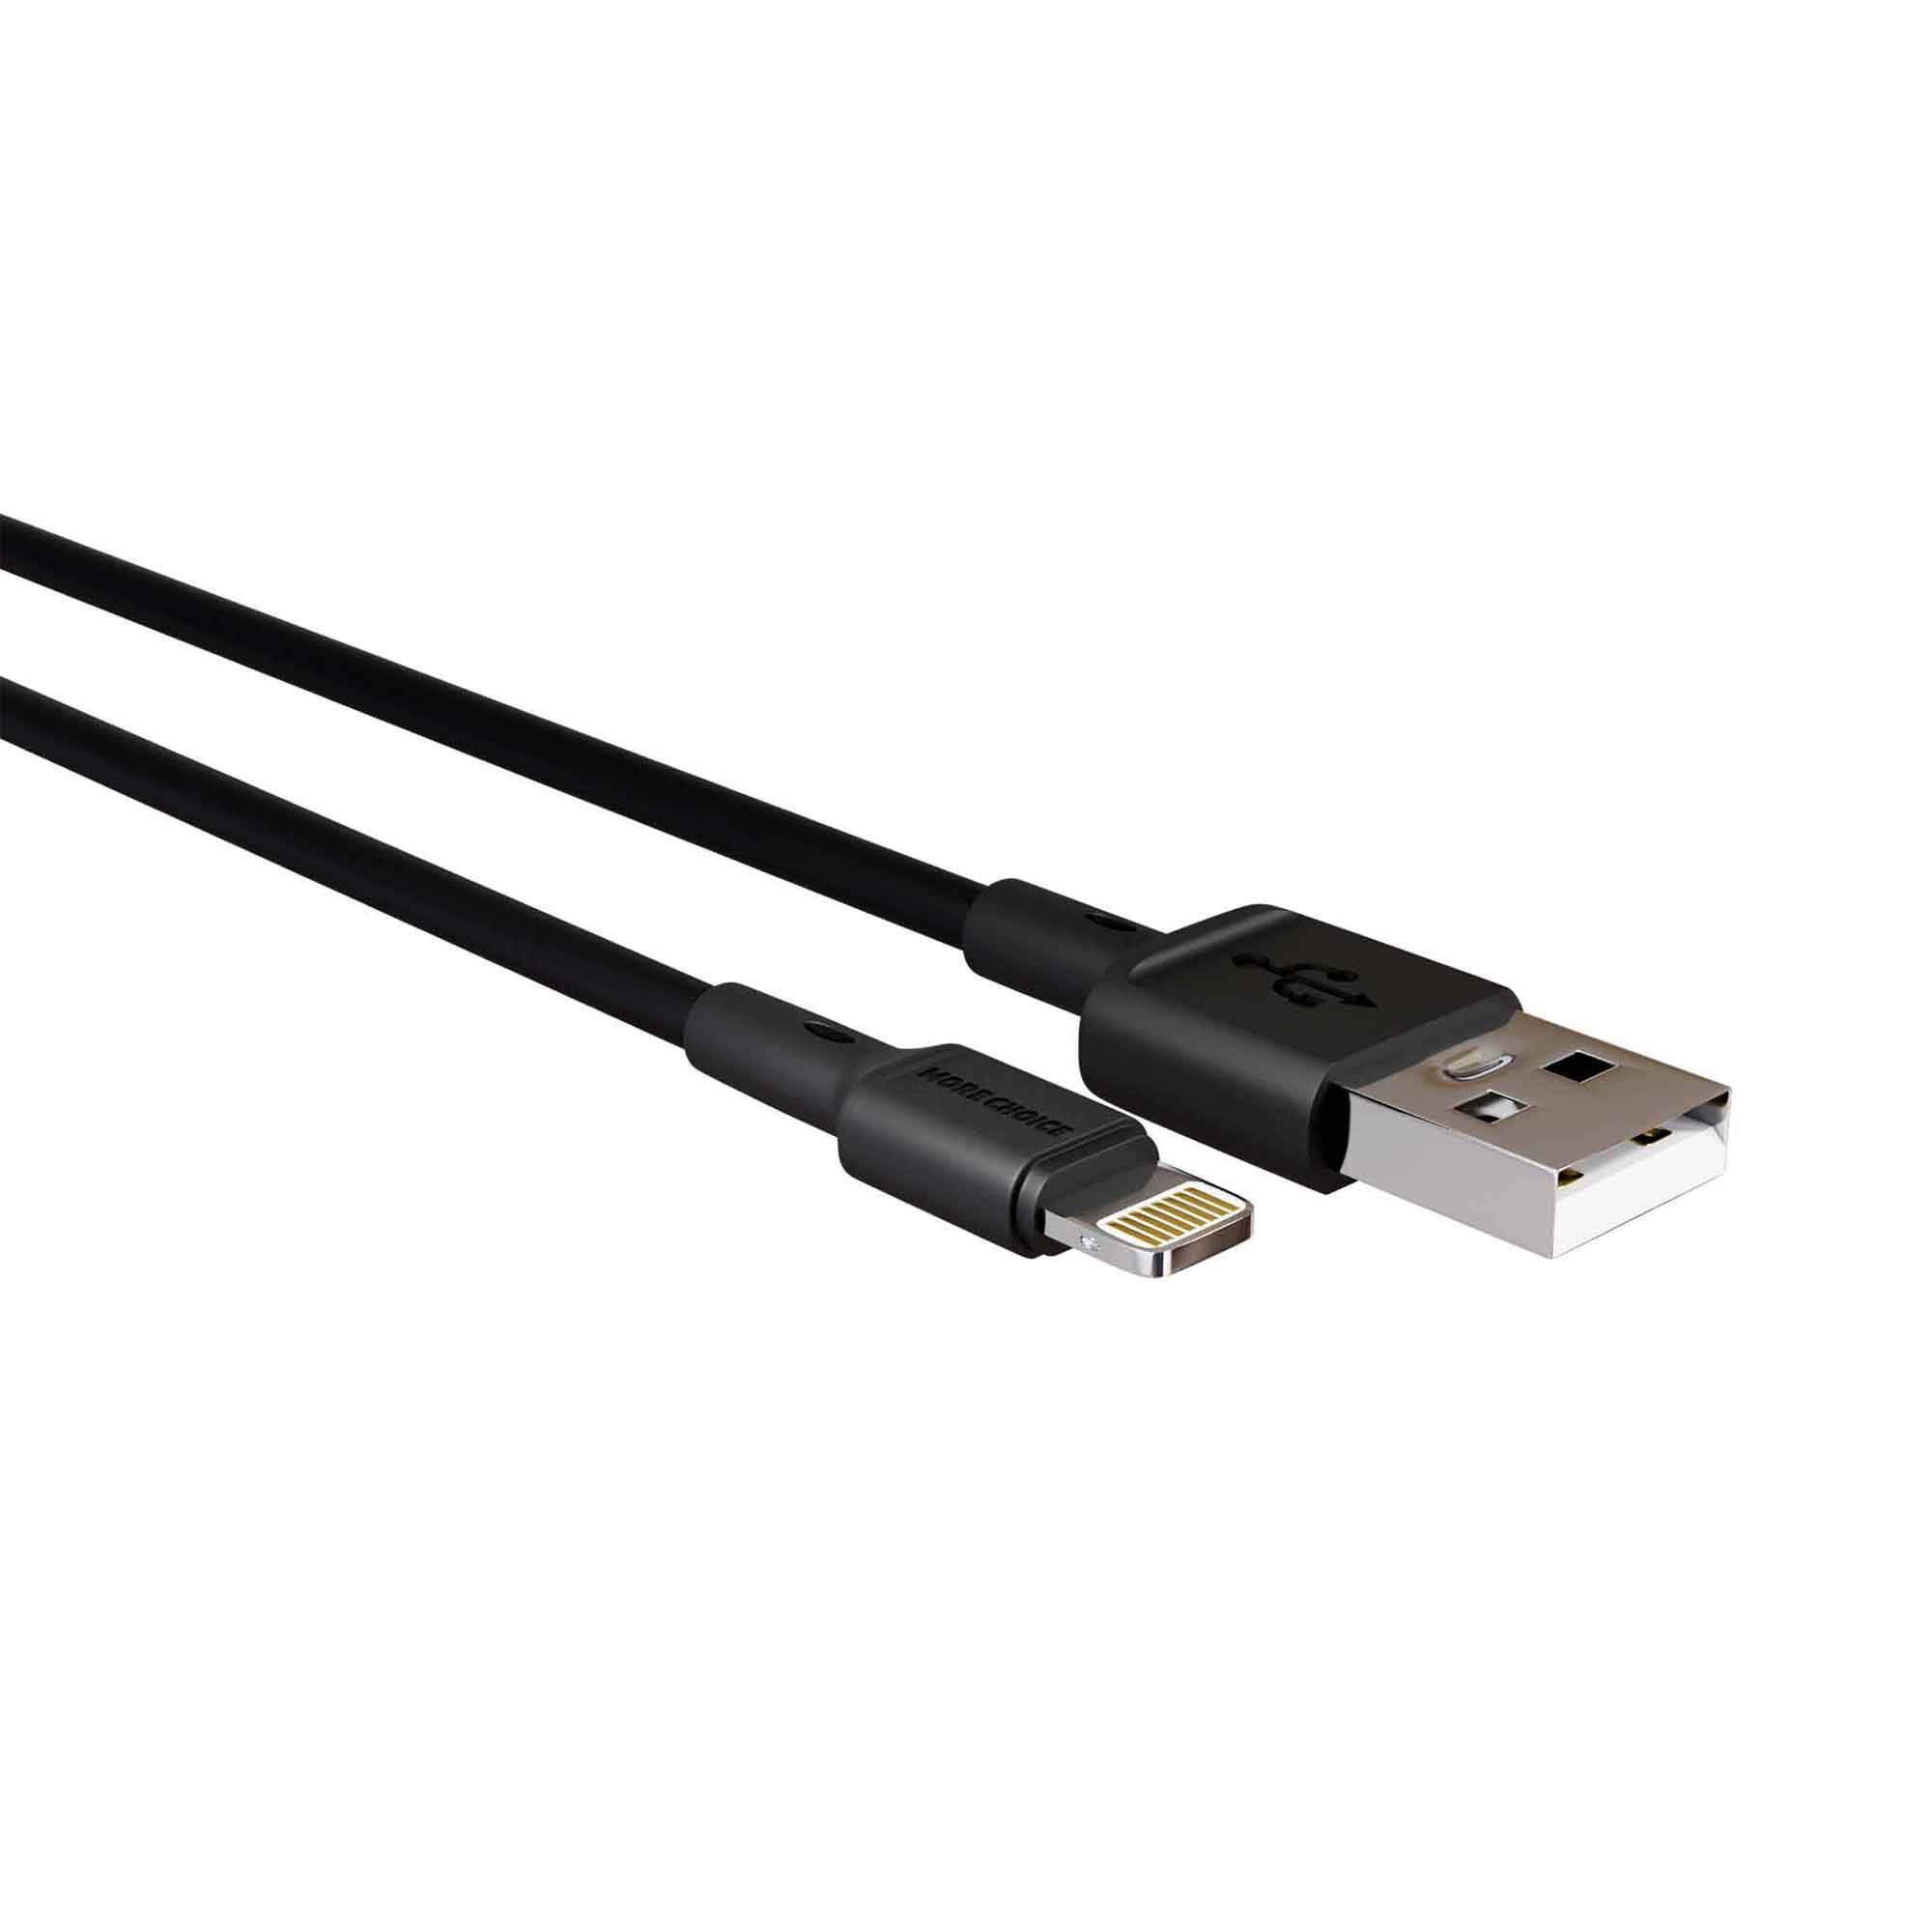 Дата-кабель More choice K14i TPE 2.0A Lightning 8-pin Black USB 0.25m дата кабель more choice k14i tpe 2 0a lightning 8 pin white usb